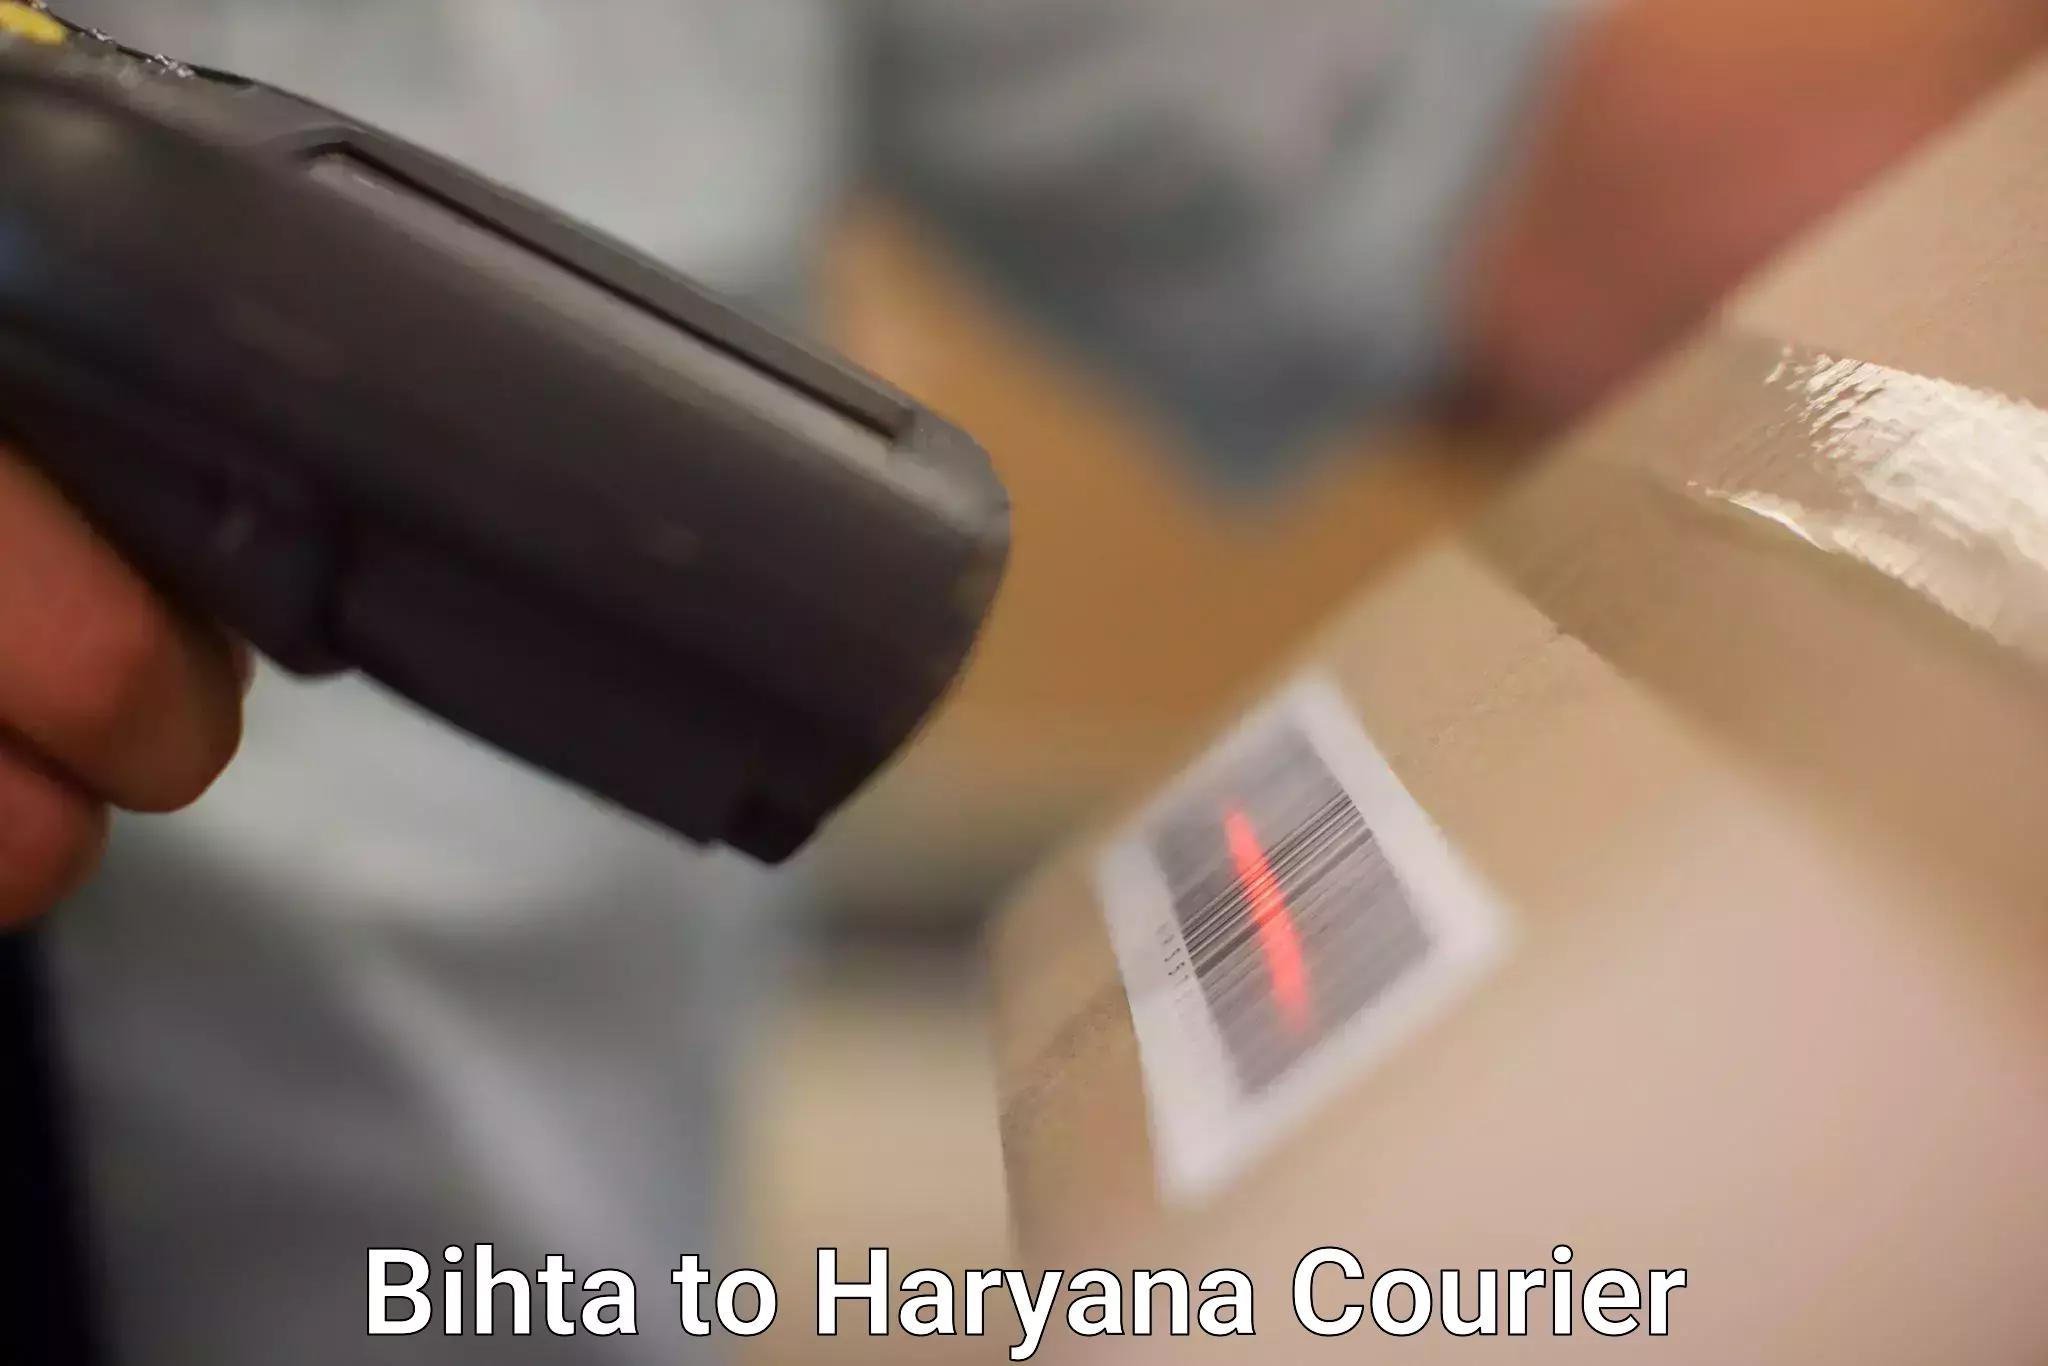 Quick dispatch service Bihta to Haryana